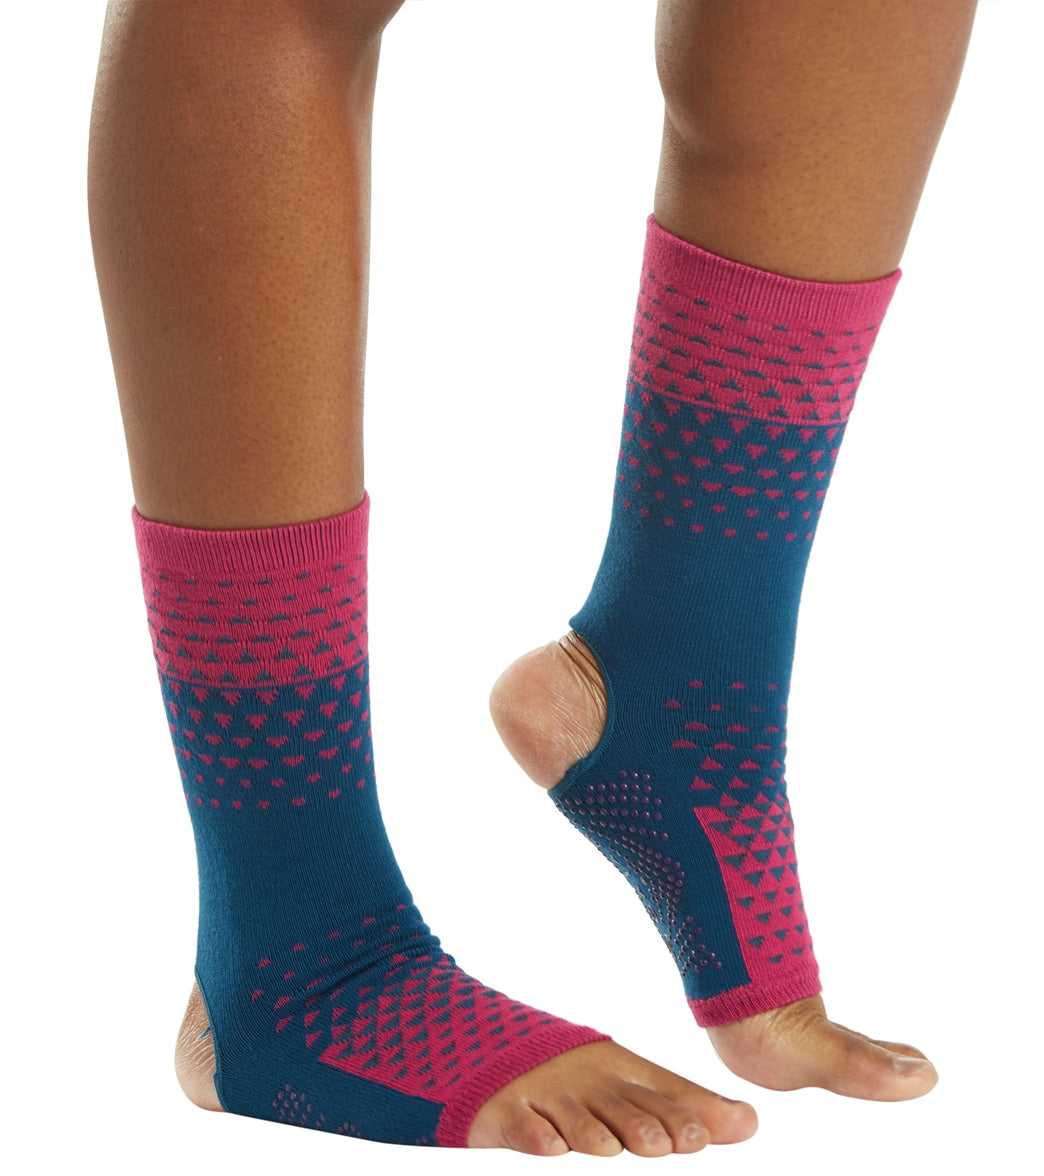 Gaiam Grippy Yoga Non-Slip Socks Women